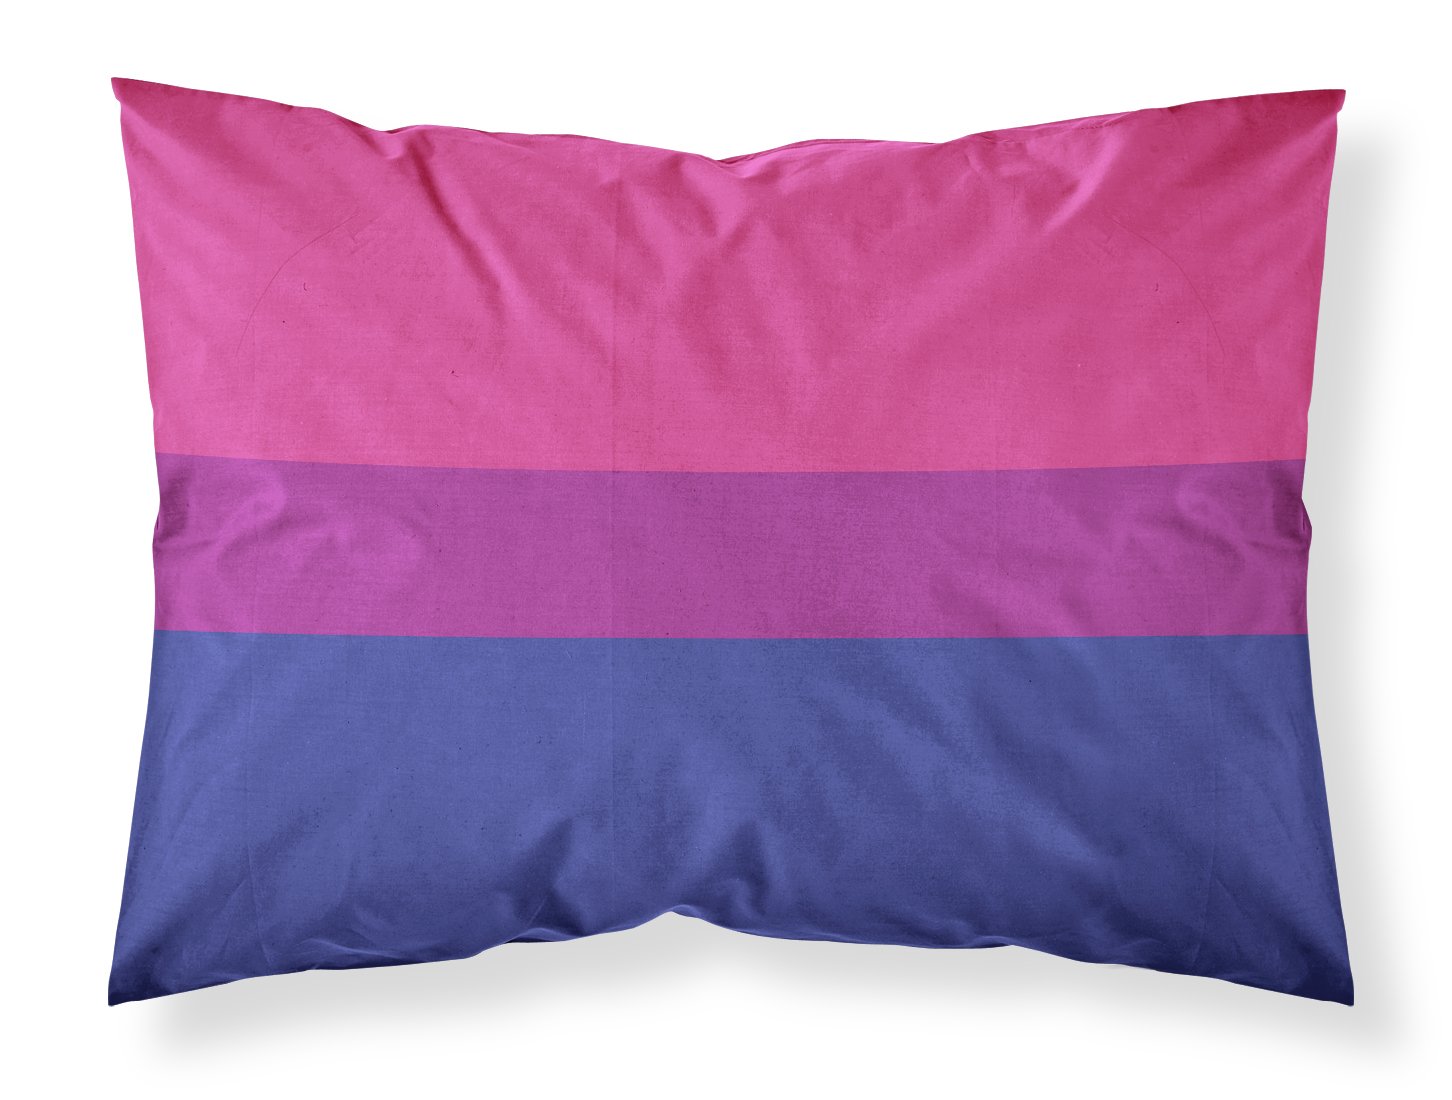 Buy this Bisexual Pride Fabric Standard Pillowcase